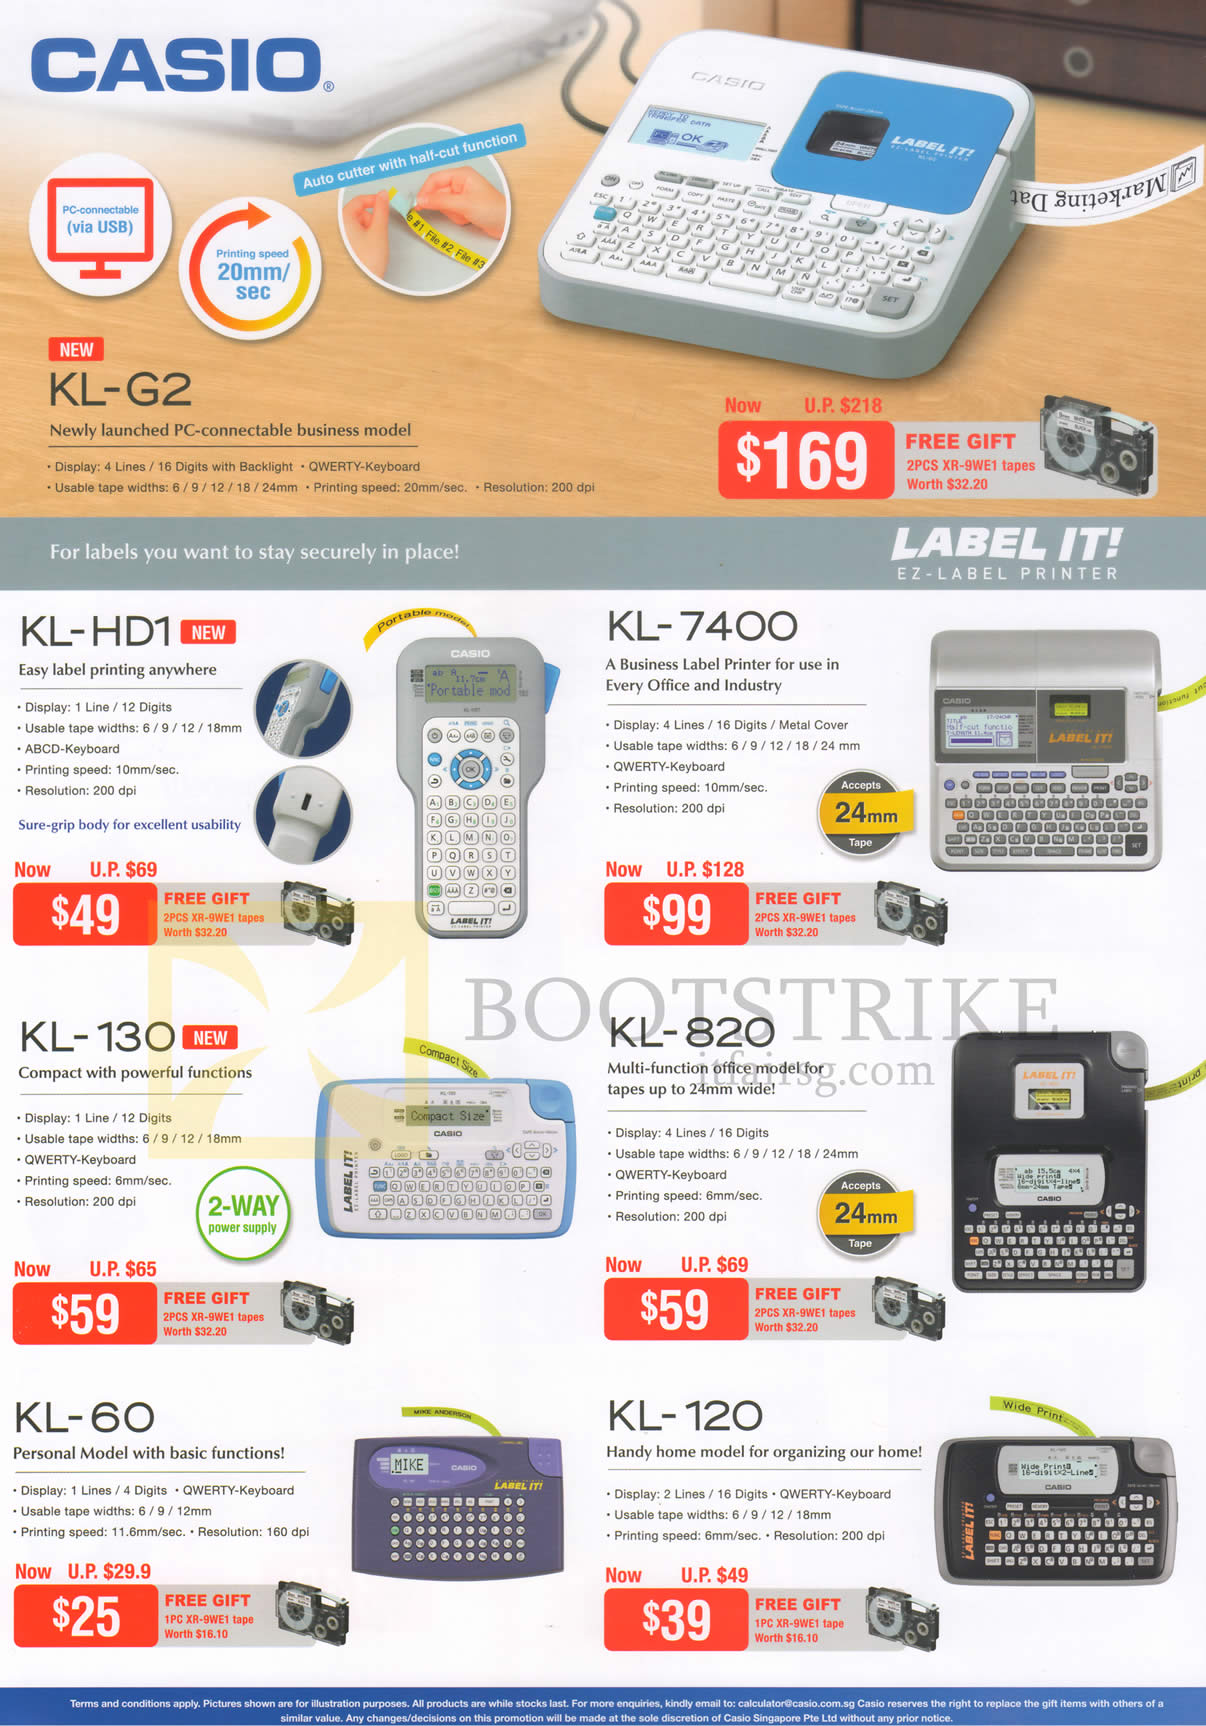 COMEX 2015 price list image brochure of Casio Label Printers Label It KL-G2, KL-HD1, KL-7400, KL-130, KL-820, KL-60, KL-120